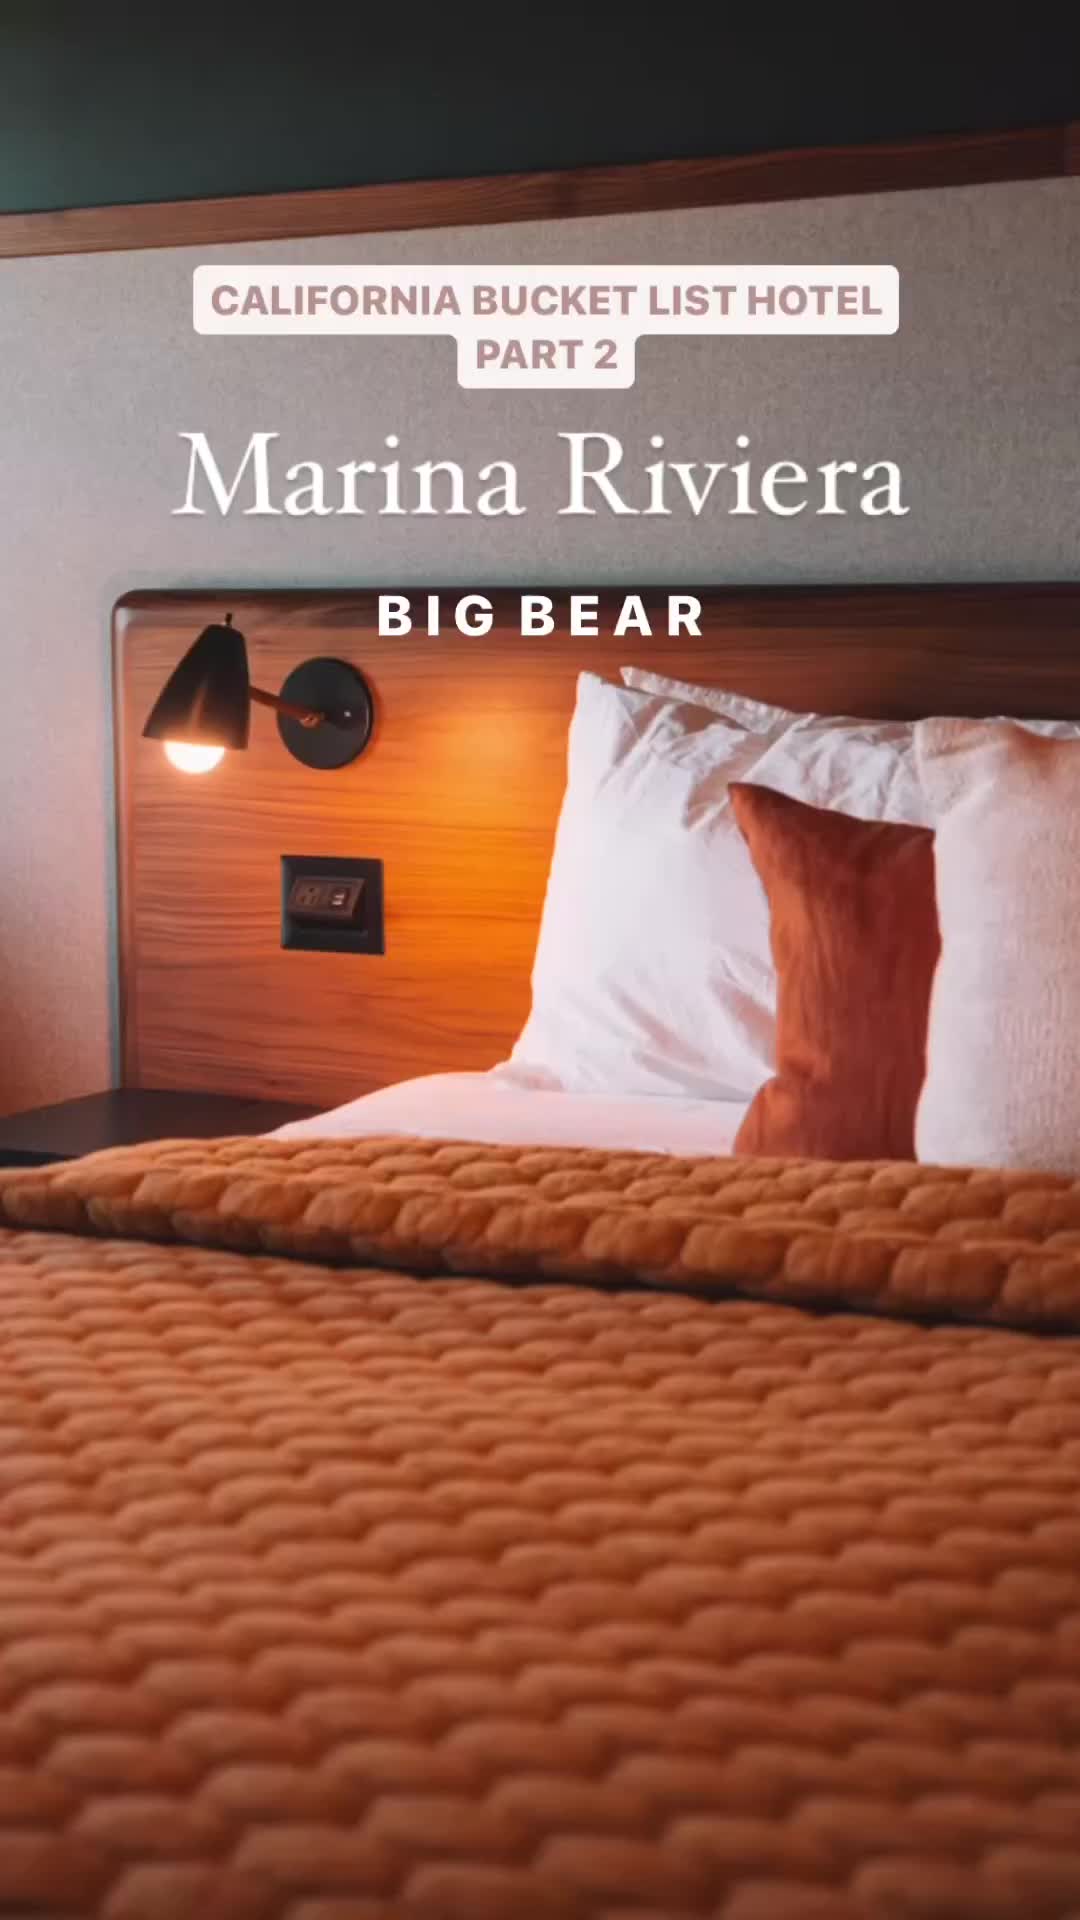 California Hotel Bucket List: Marina Riviera